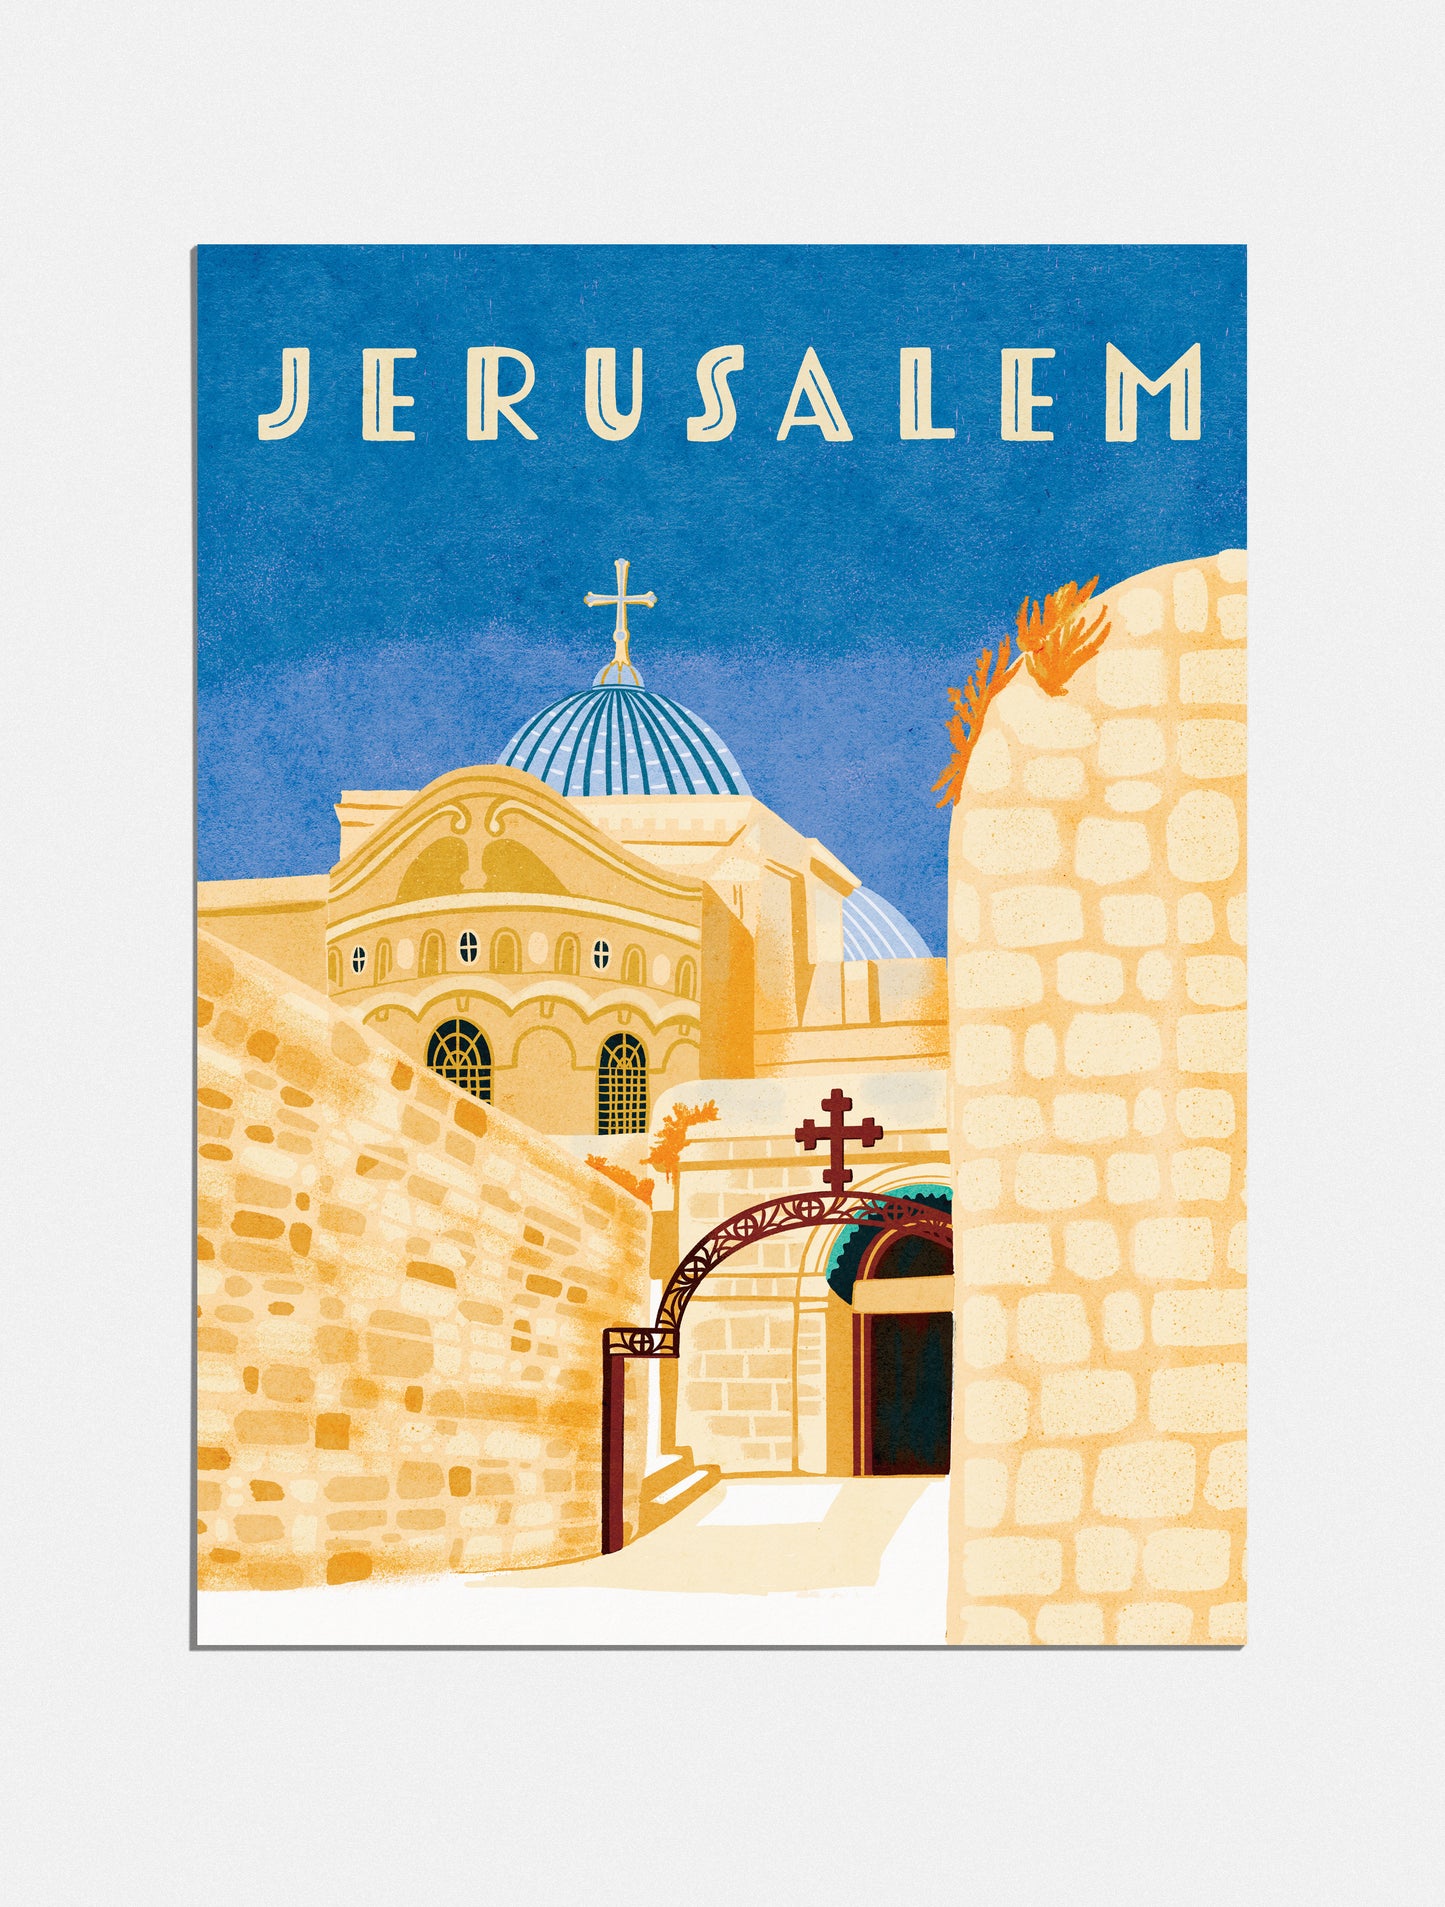 Print: Pilgrimage to Jerusalem